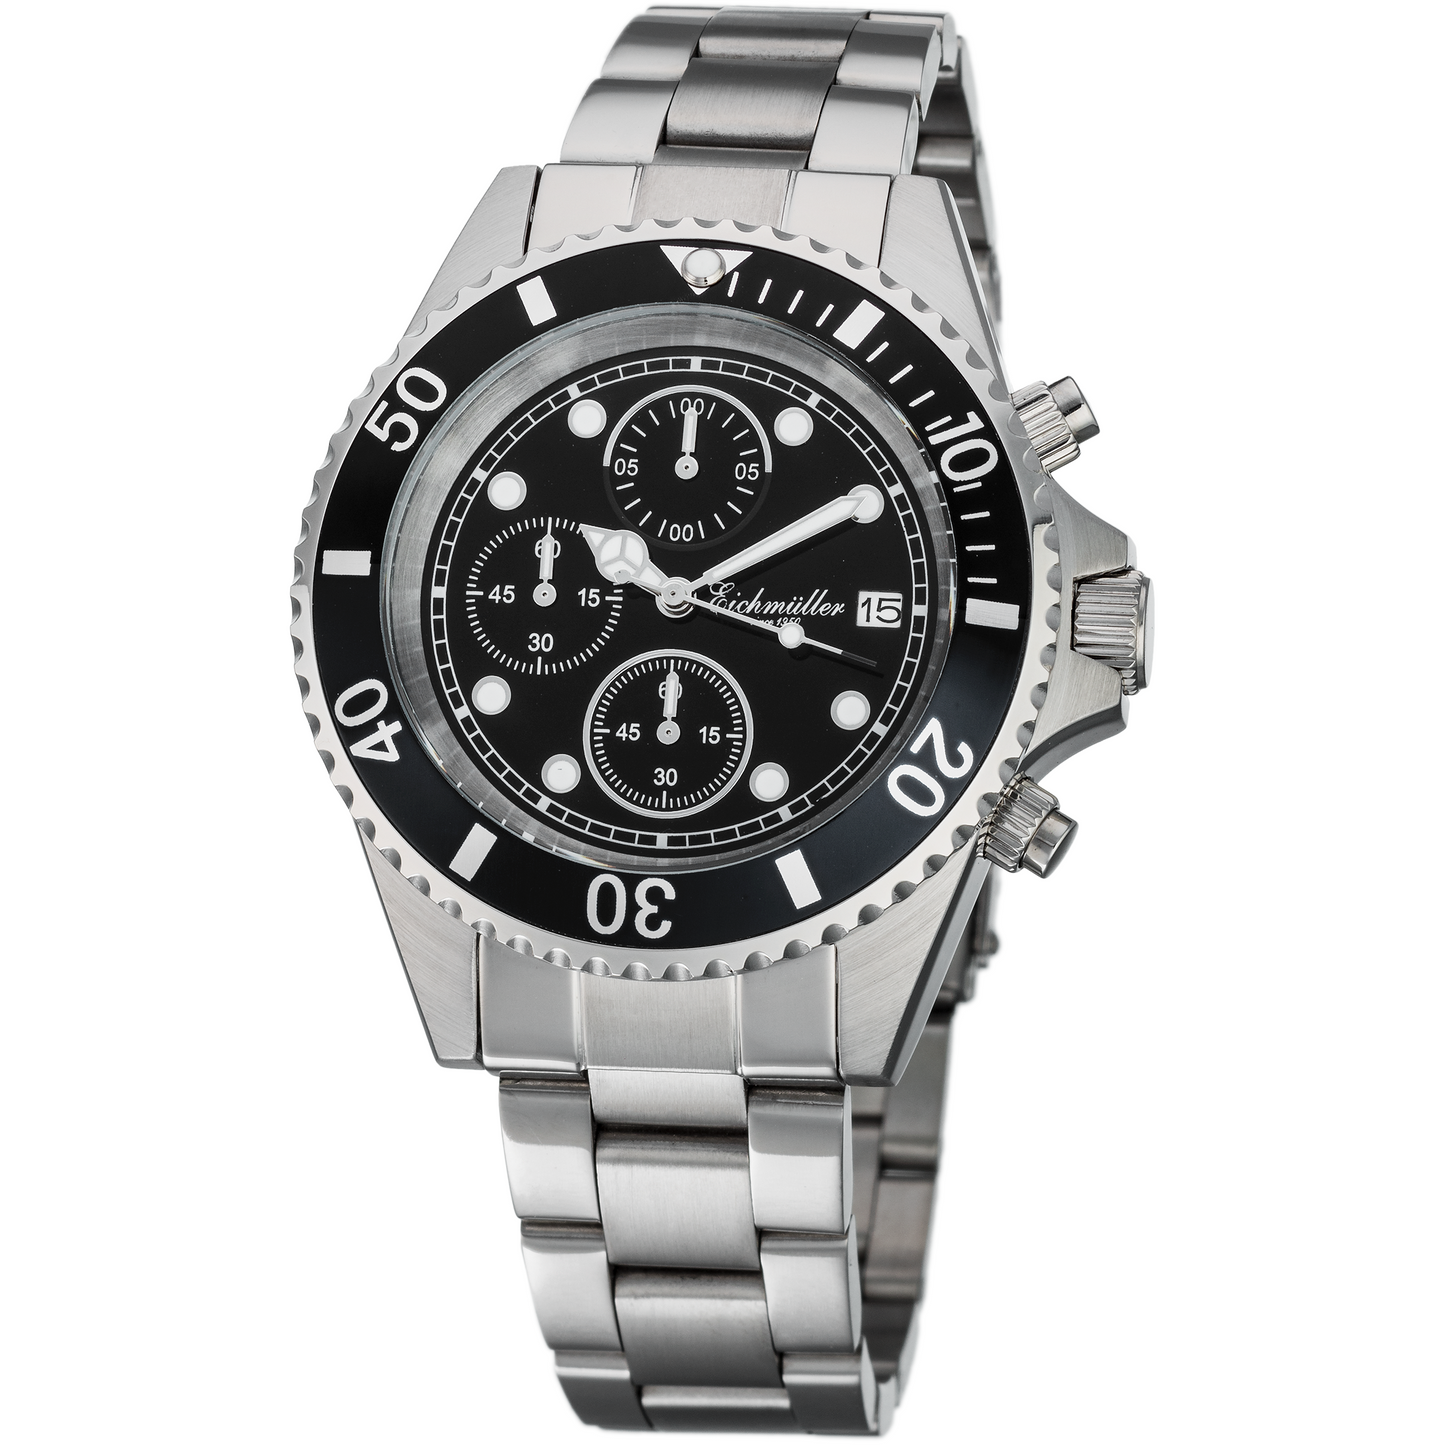 EICHMULLER since 1950 Diver Chrono 20ATM Silver/Black Watch